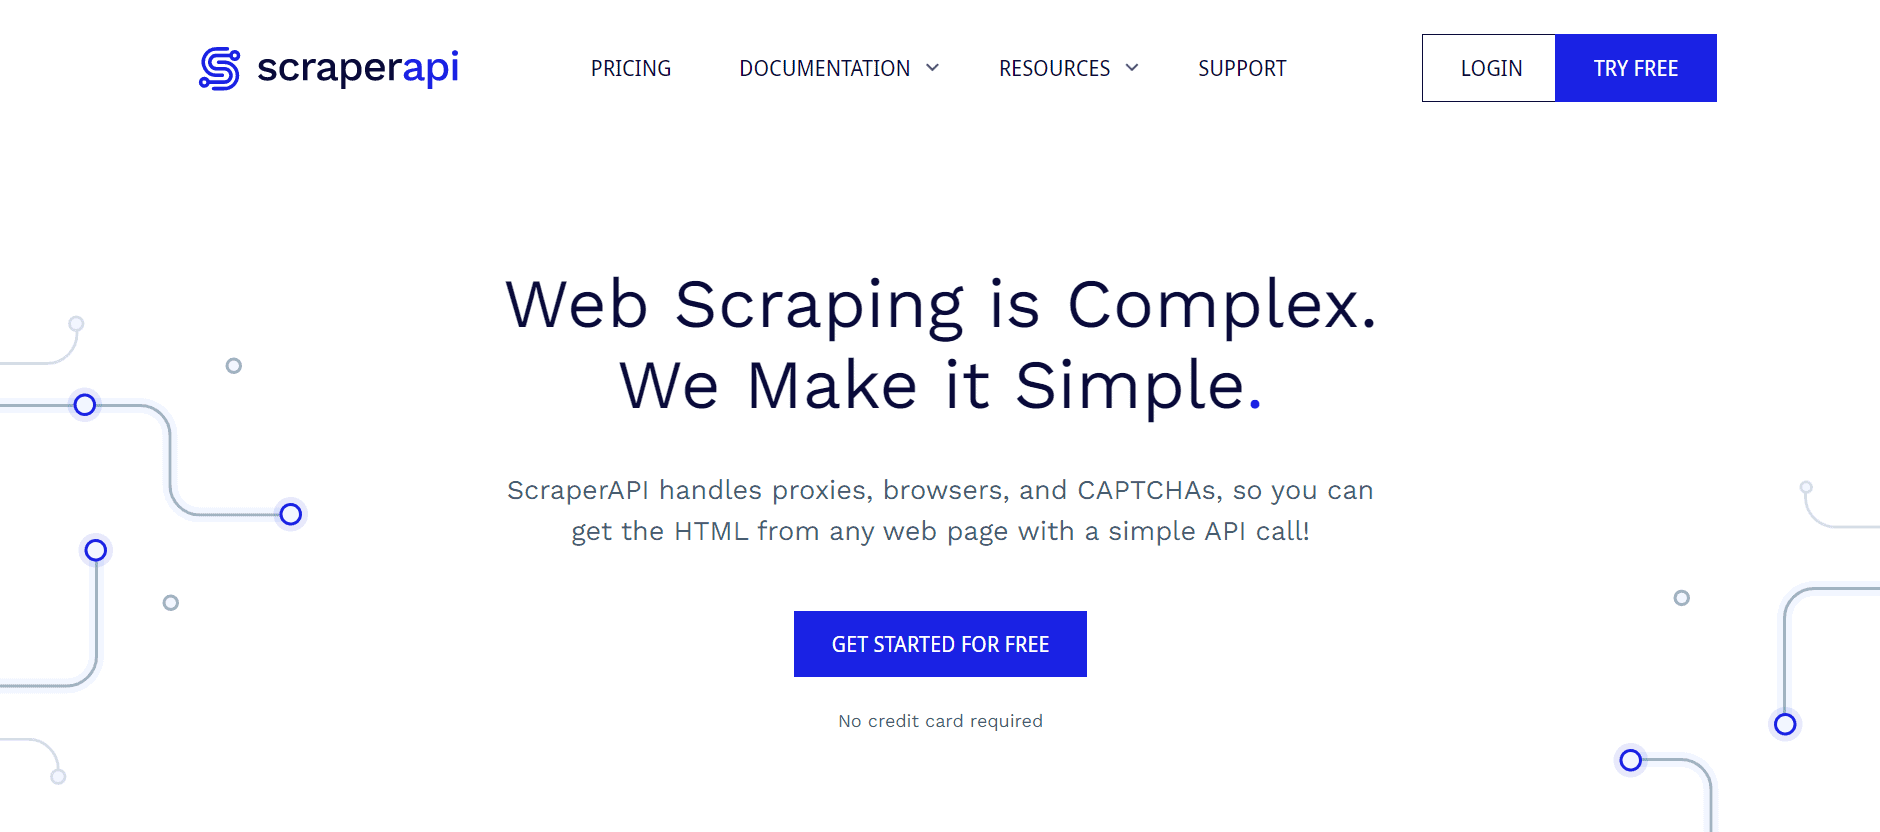 scraperapi homepage